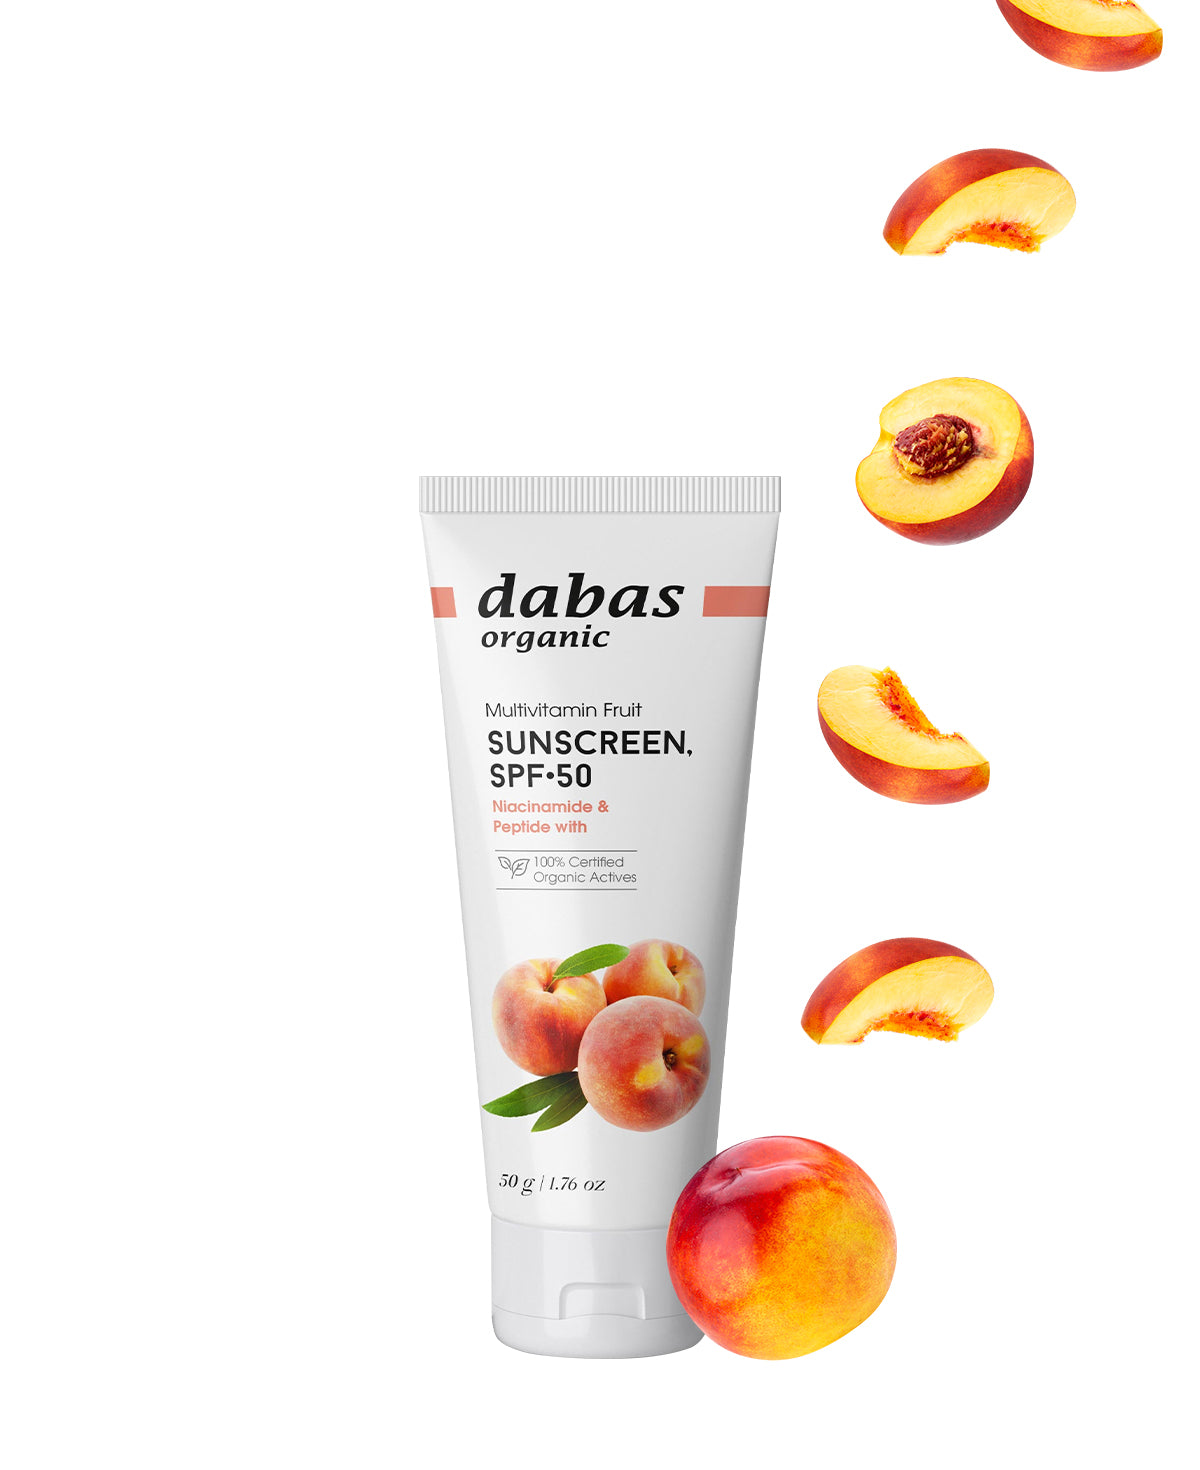 Dabas Organic Multivitamin fruit Sunscreen SPF-50